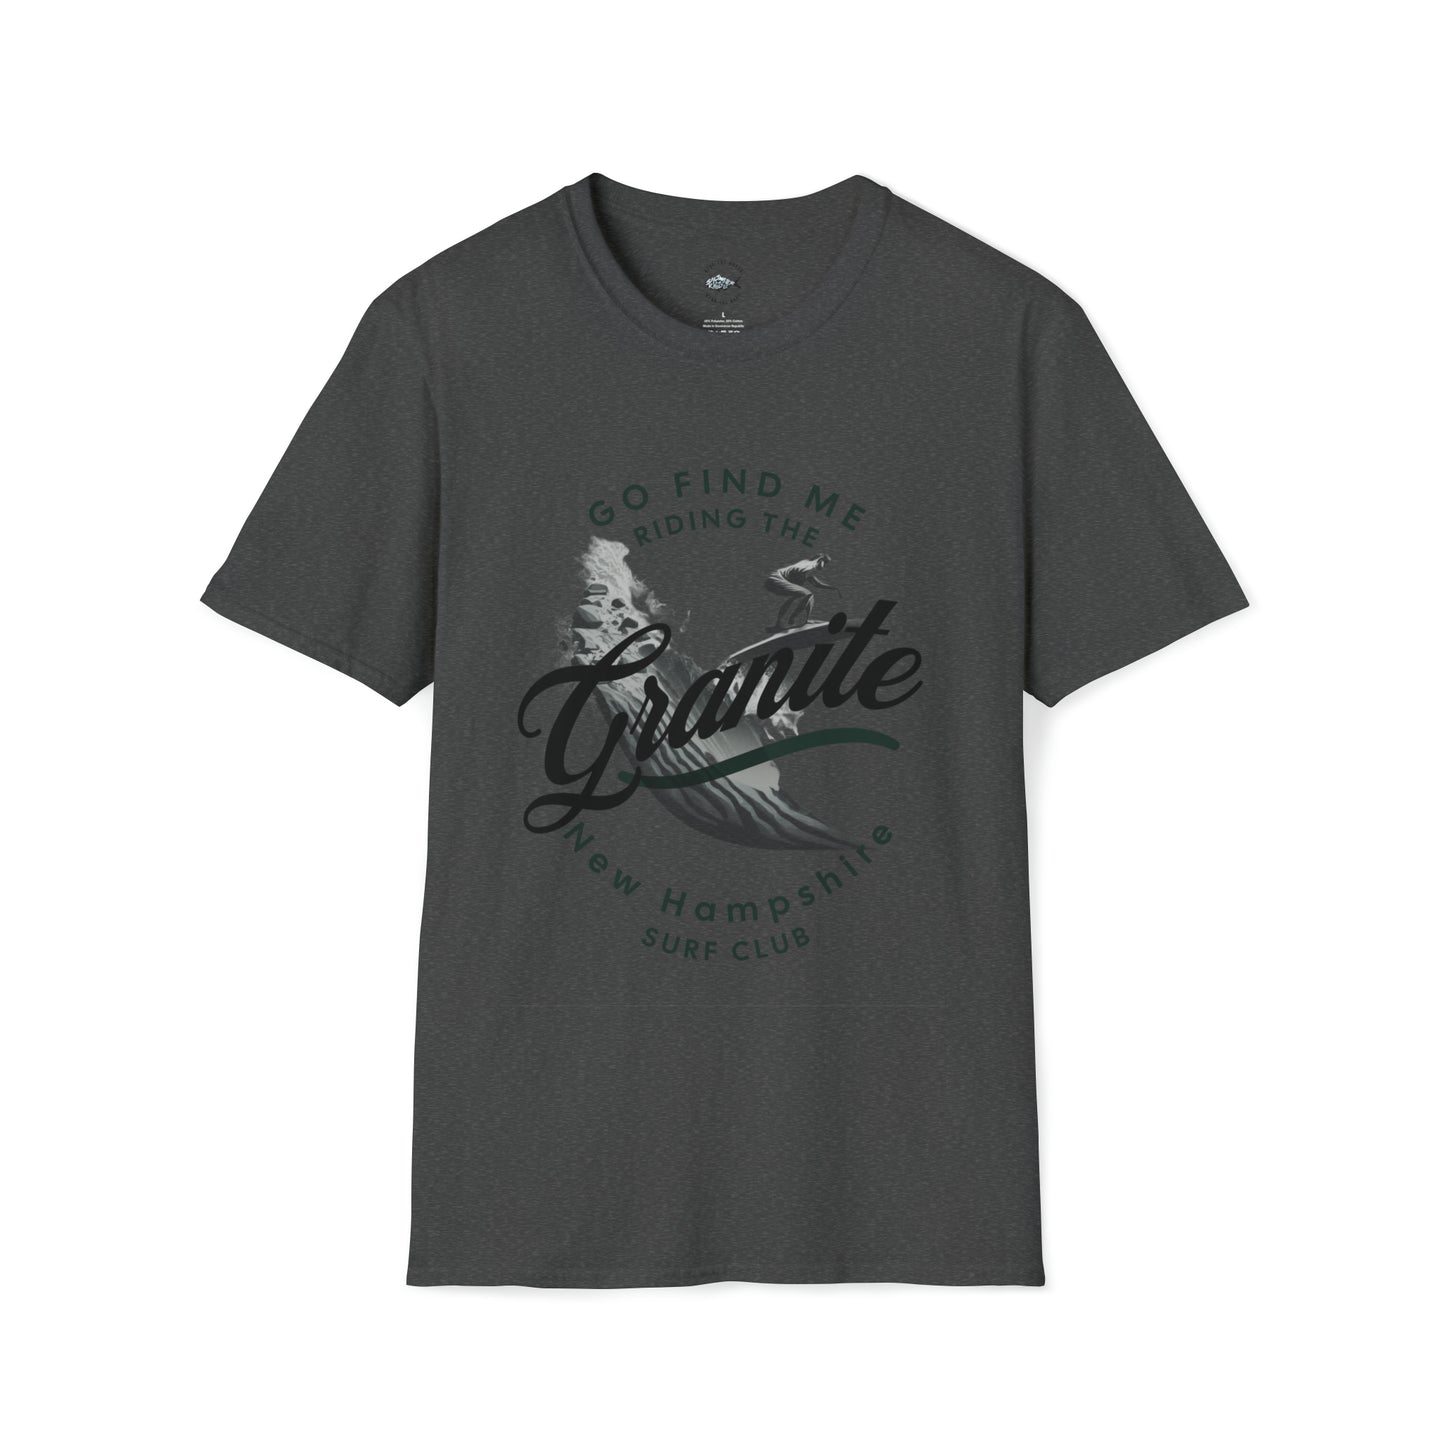 New Hampshire Beach Club T-Shirt